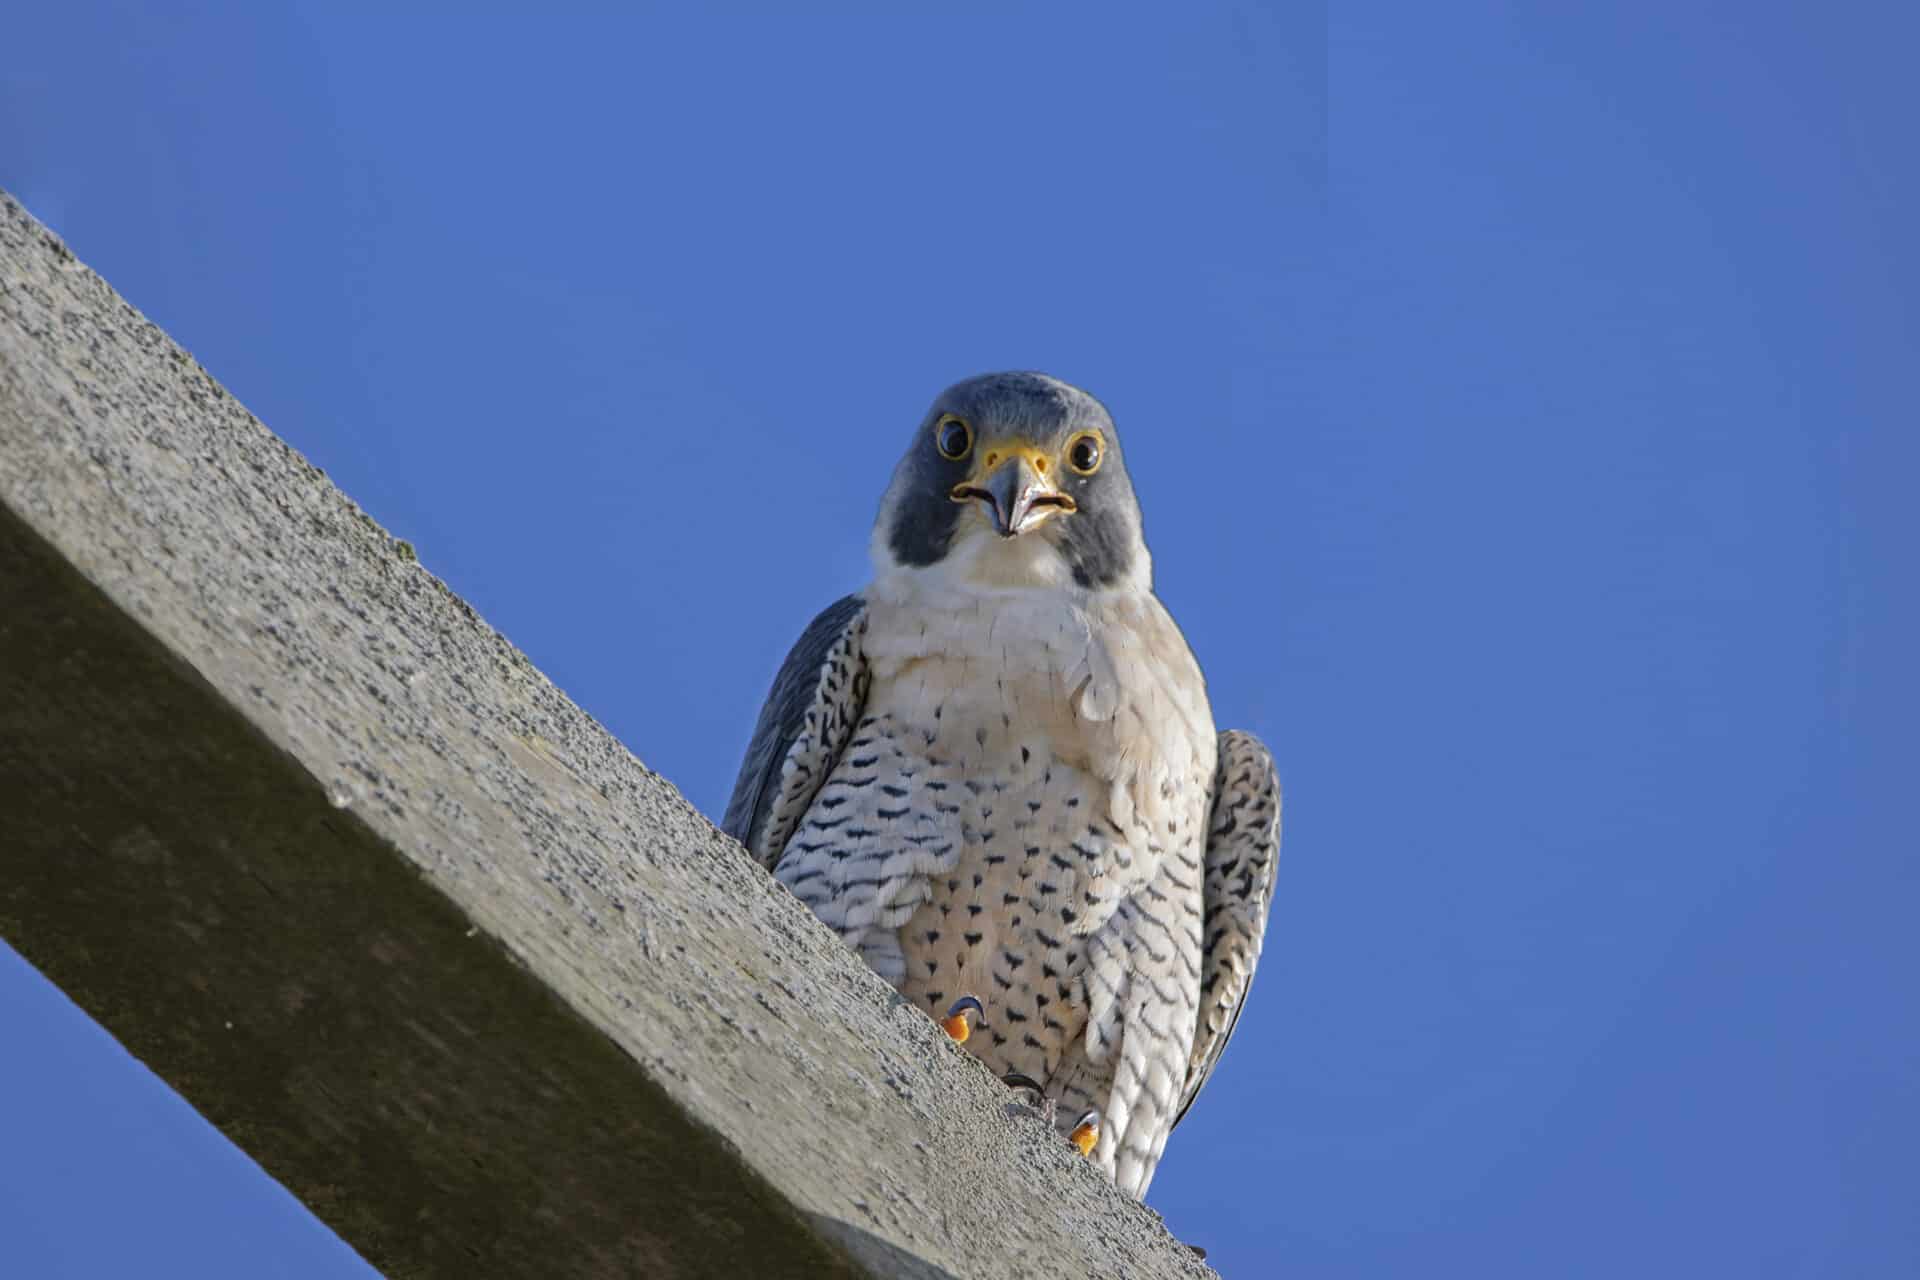 Peregrine Falcon, November 23, 2021